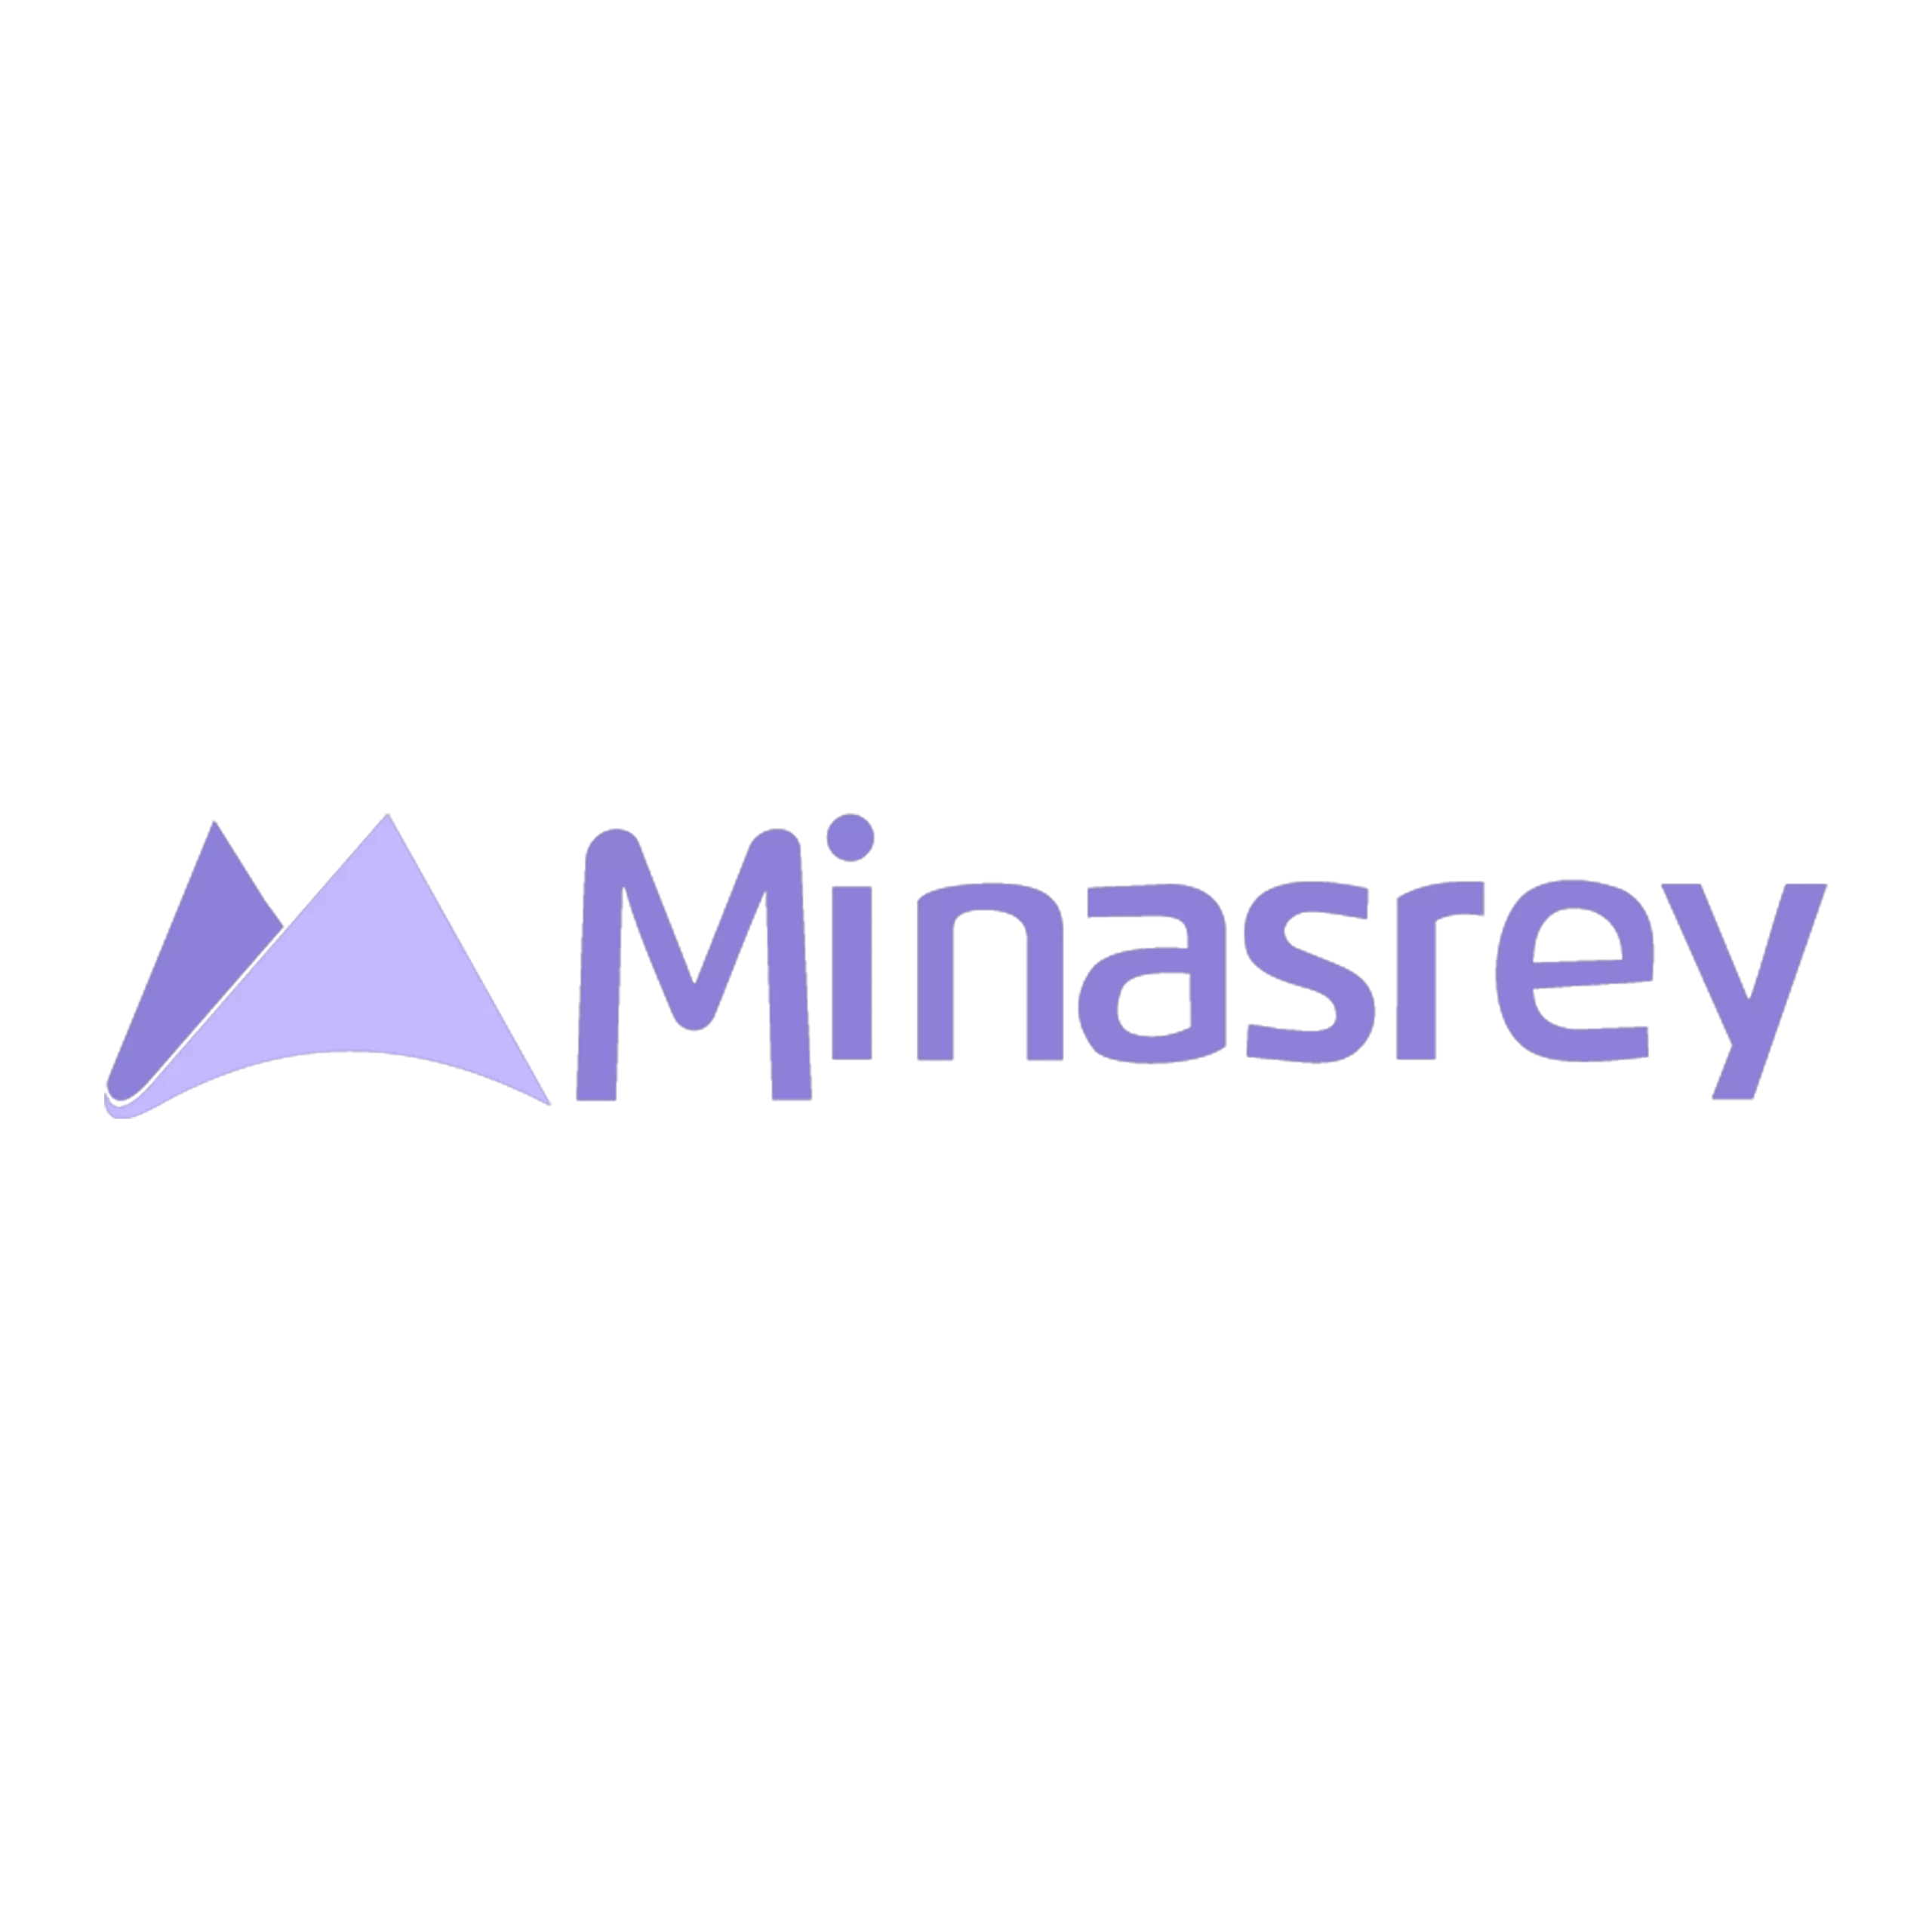 Minasrey